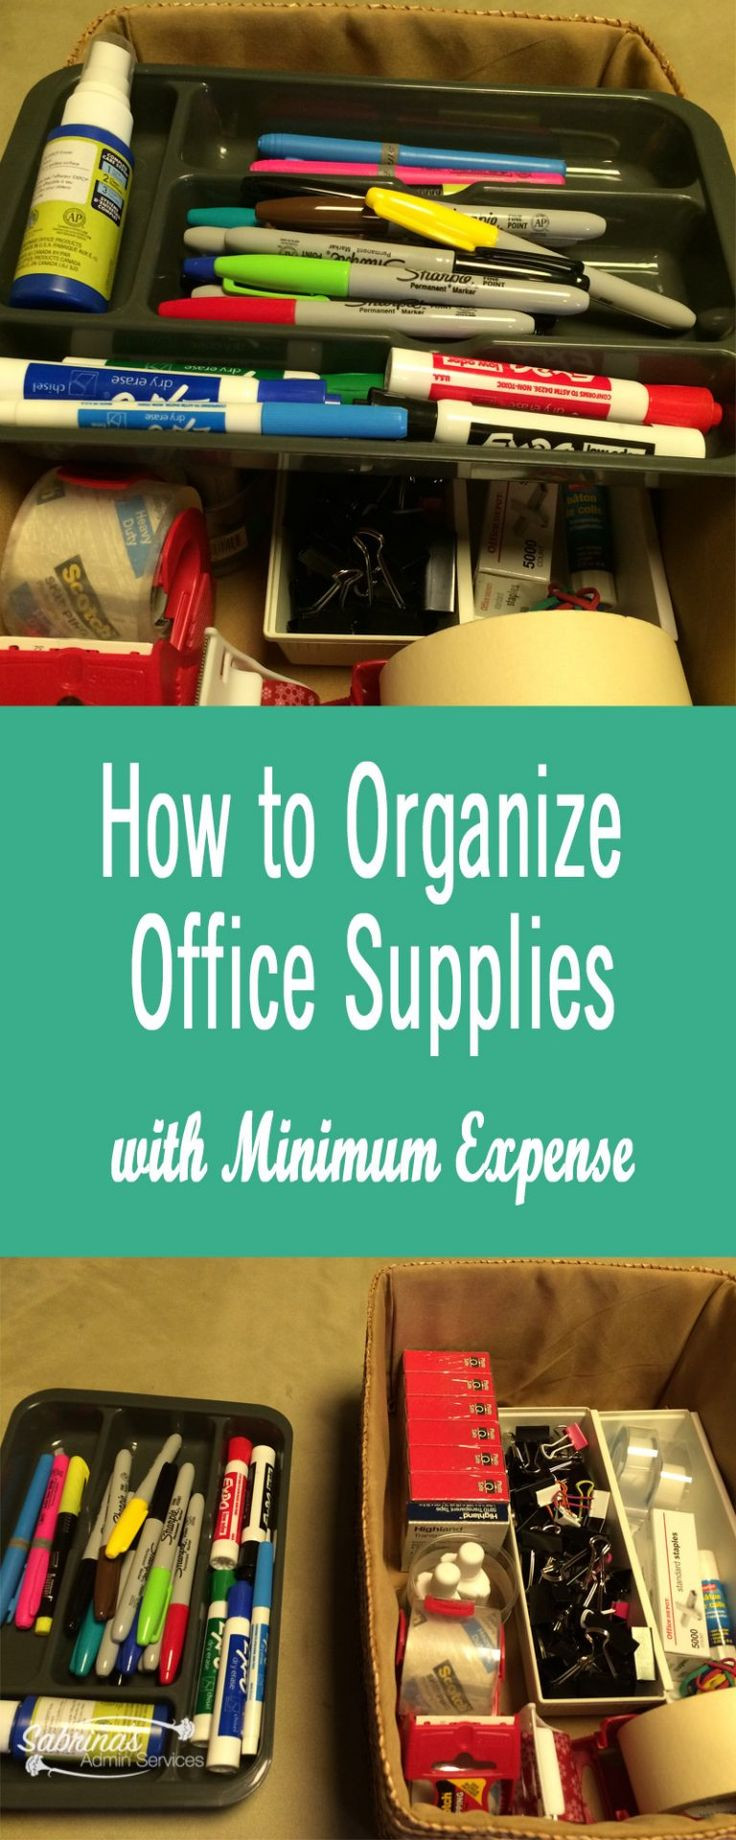 Office Supply Organization Ideas
 Best 25 Organize office supplies ideas on Pinterest